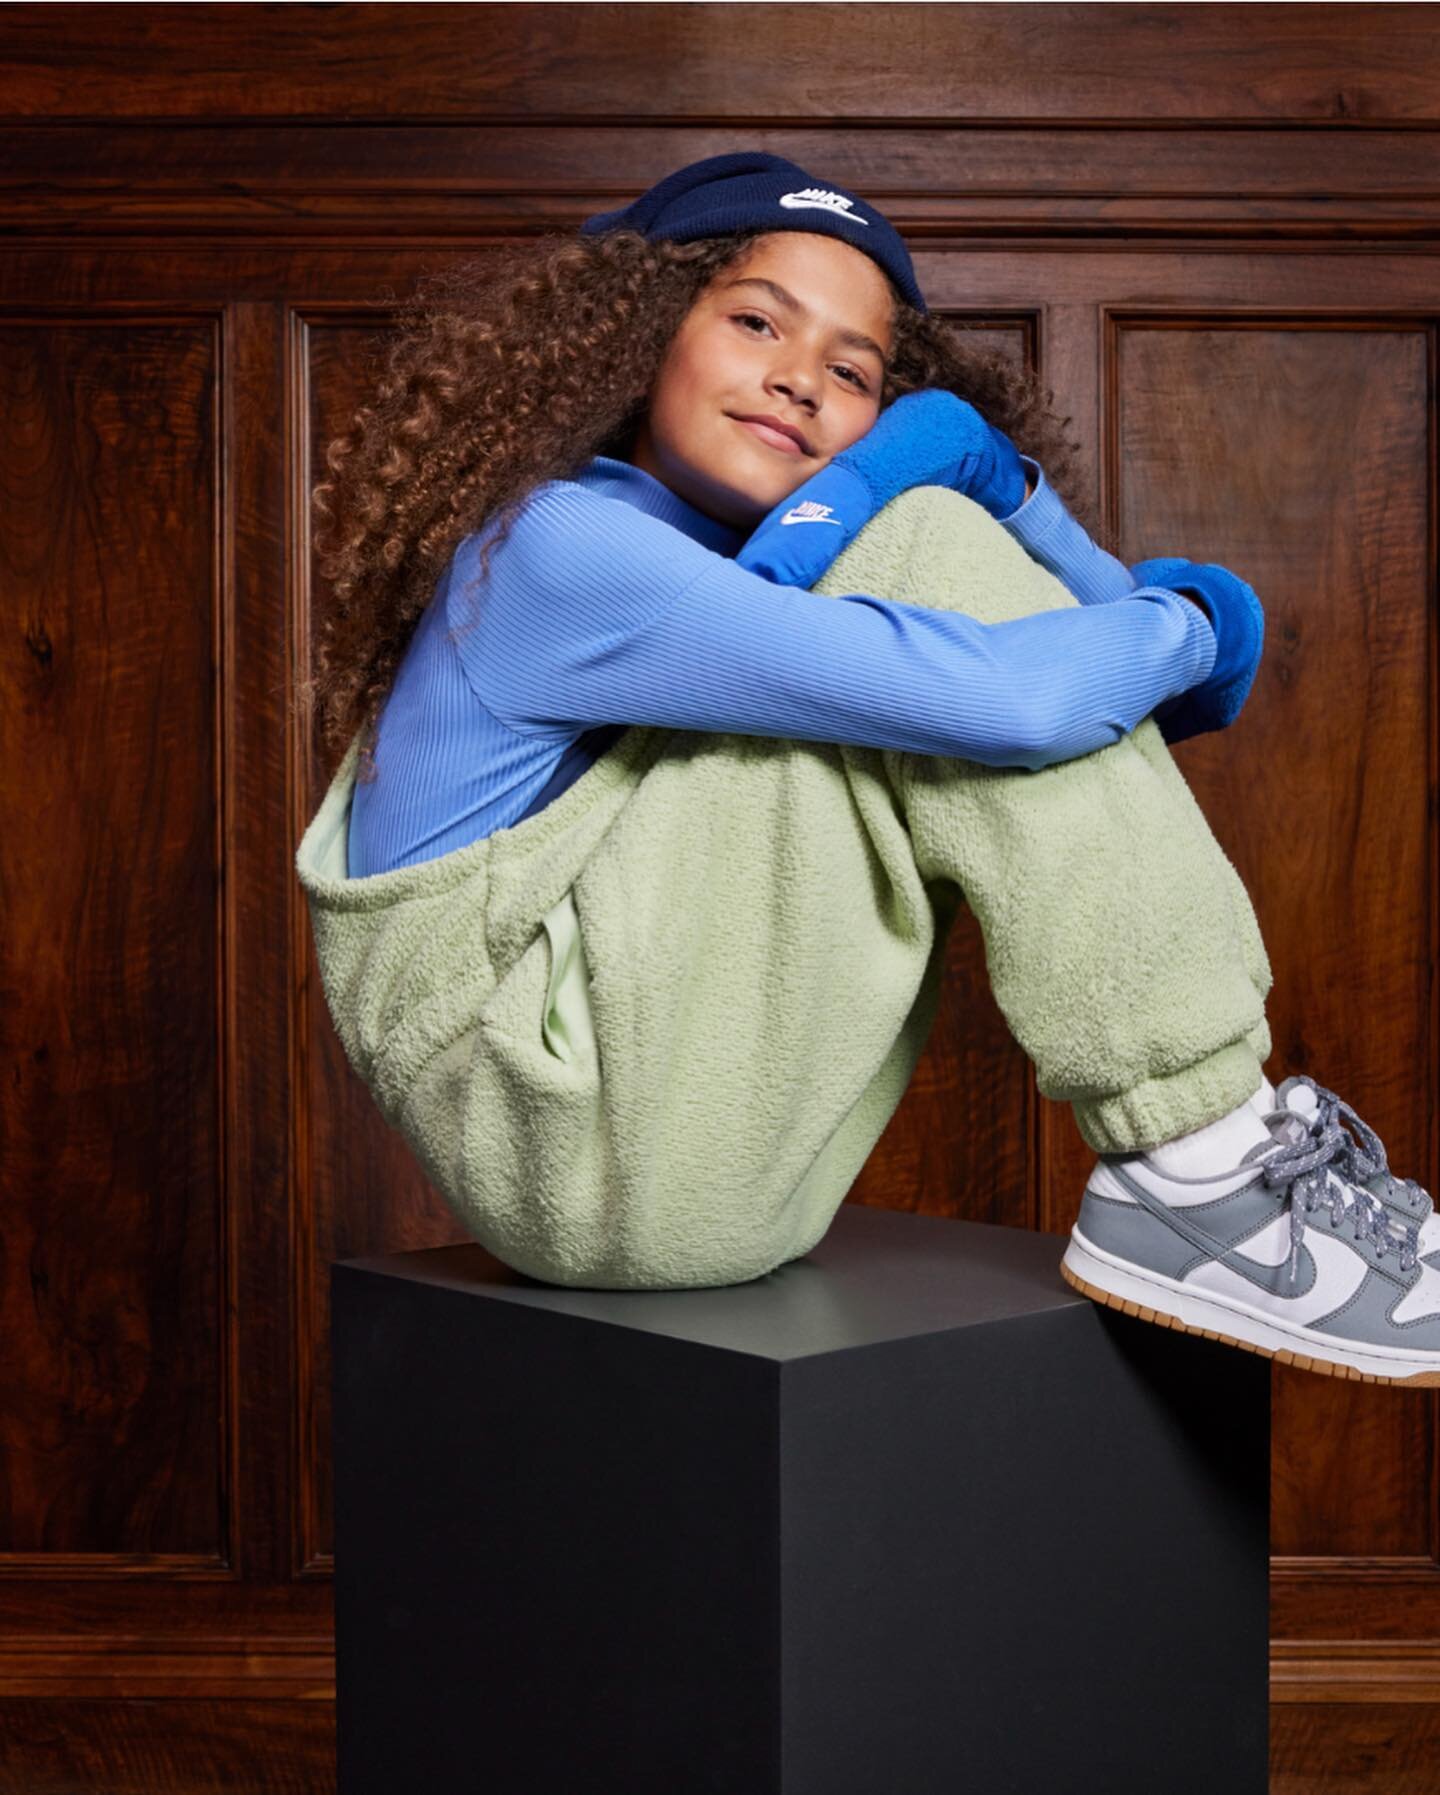 Nike Holiday (part 1) 🎁 Big and little kids Apache, Anna, Zaniya, Sonali, Isabella, Sydney, Zara, and Ryder ❤️❤️ @nike 📸 @abdmstudio thank you @newyorkmodelskids @teribtalent @generationmm @go.bamproductions